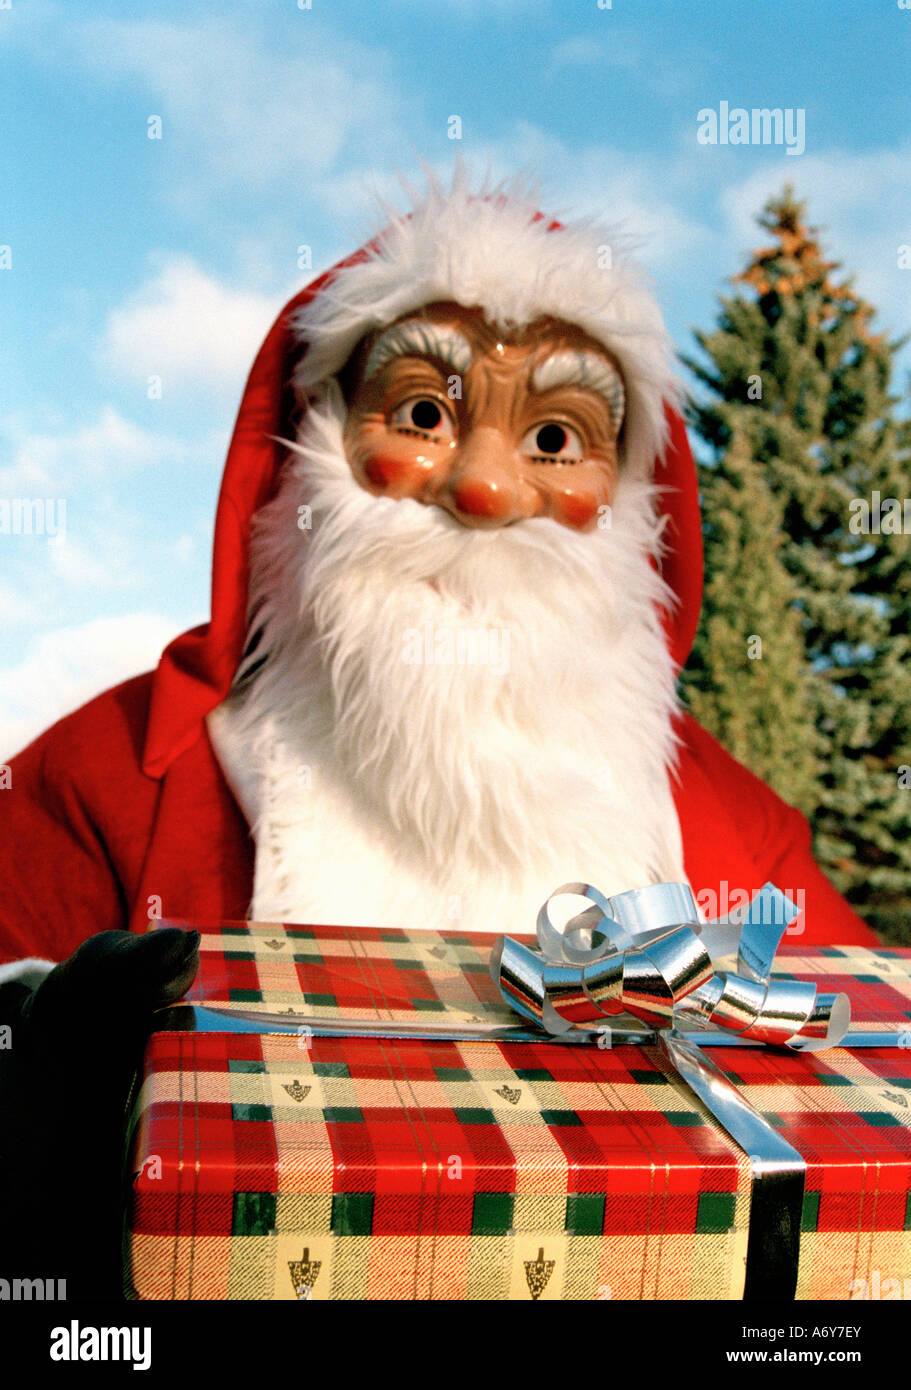 Santa Claus holding a present Stock Photo